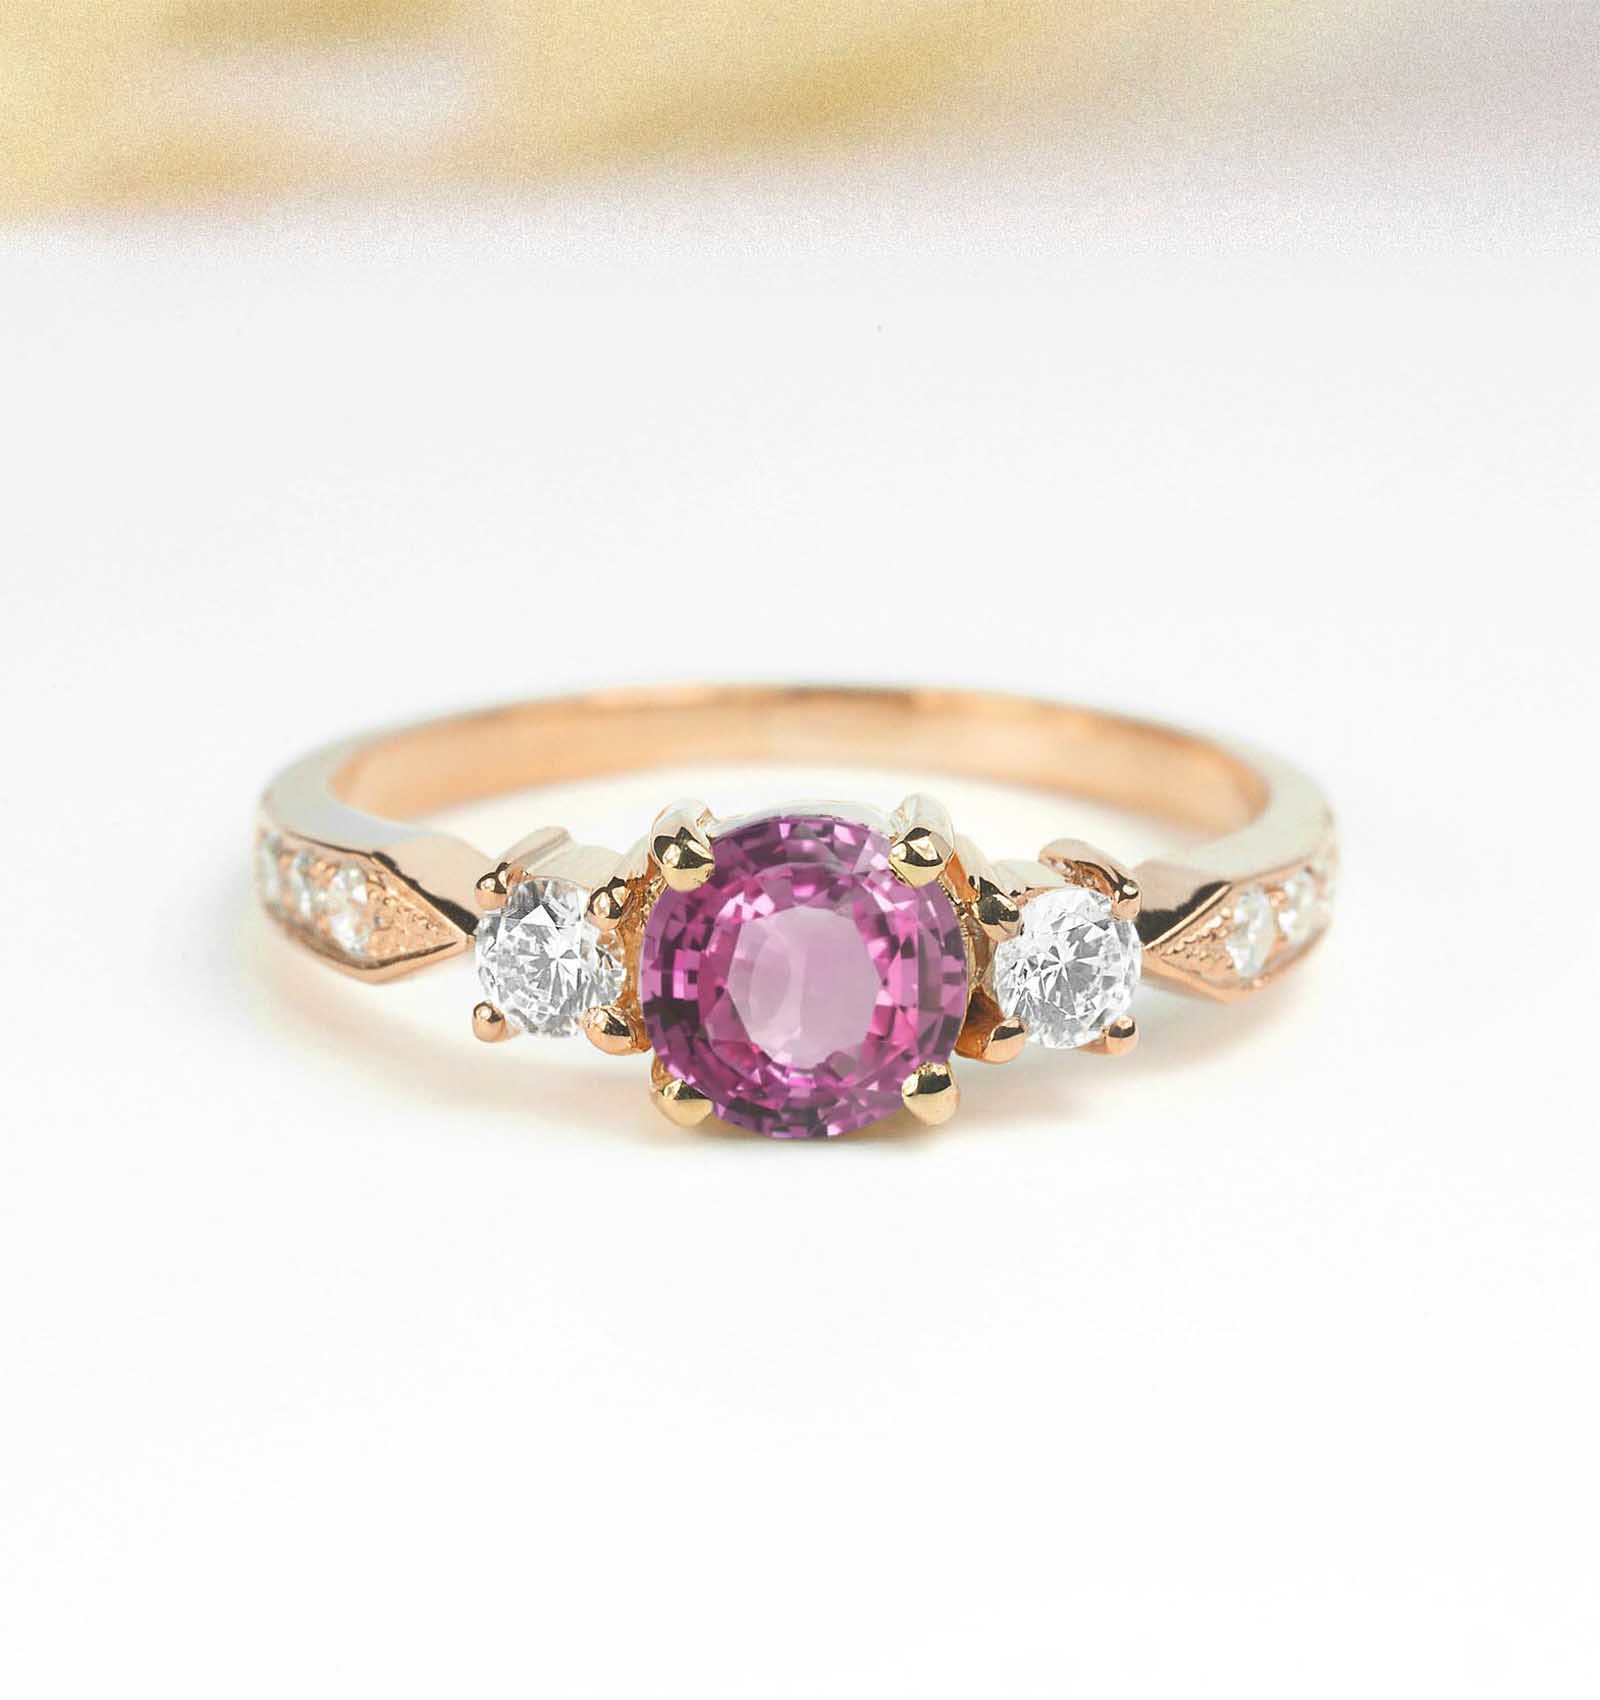 6mm light pink sapphire minimalist ring